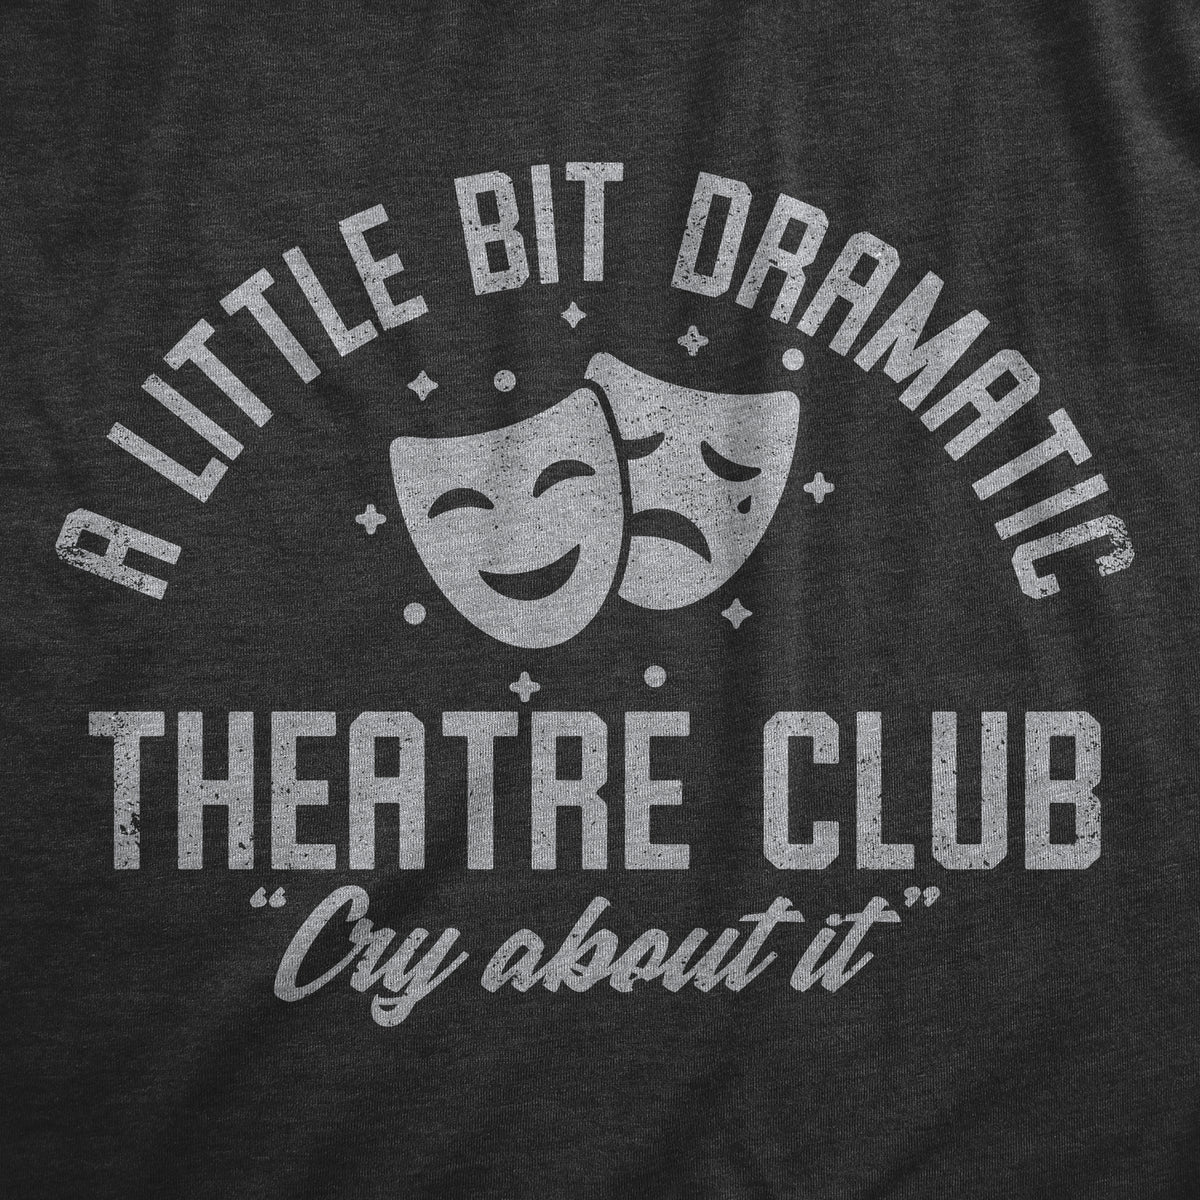 A Little Bit Dramatic Theatre Club Baby Bodysuit